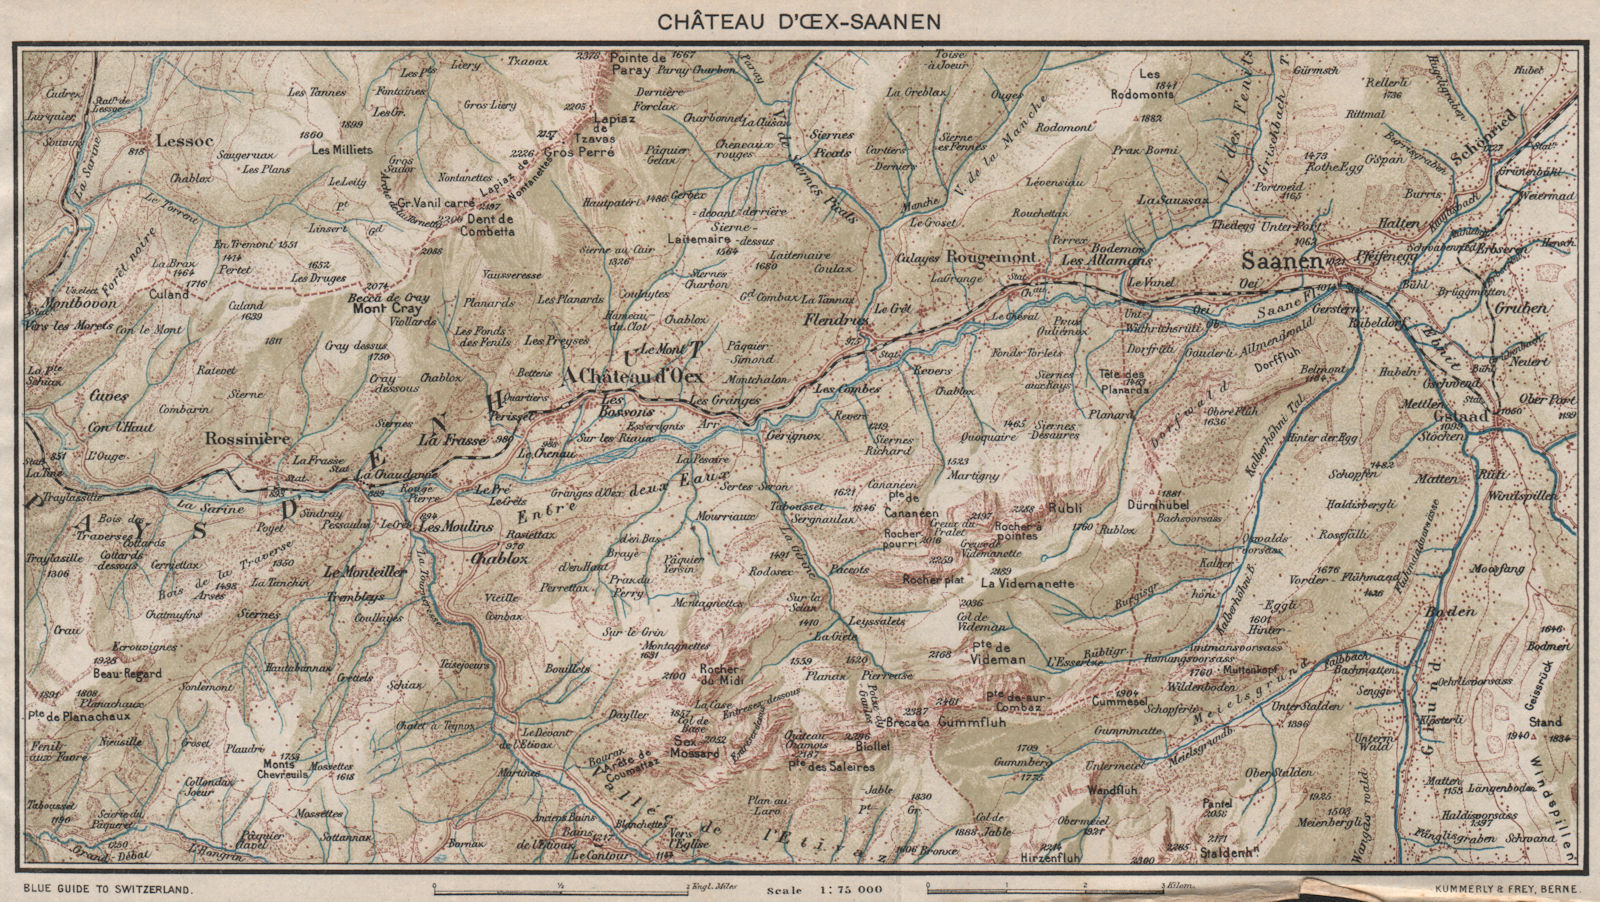 UPPER SAANE/SARINE VALLÉE VALLEY.Château d'Oex Gstaad Saanen.Vaud Berne 1930 map